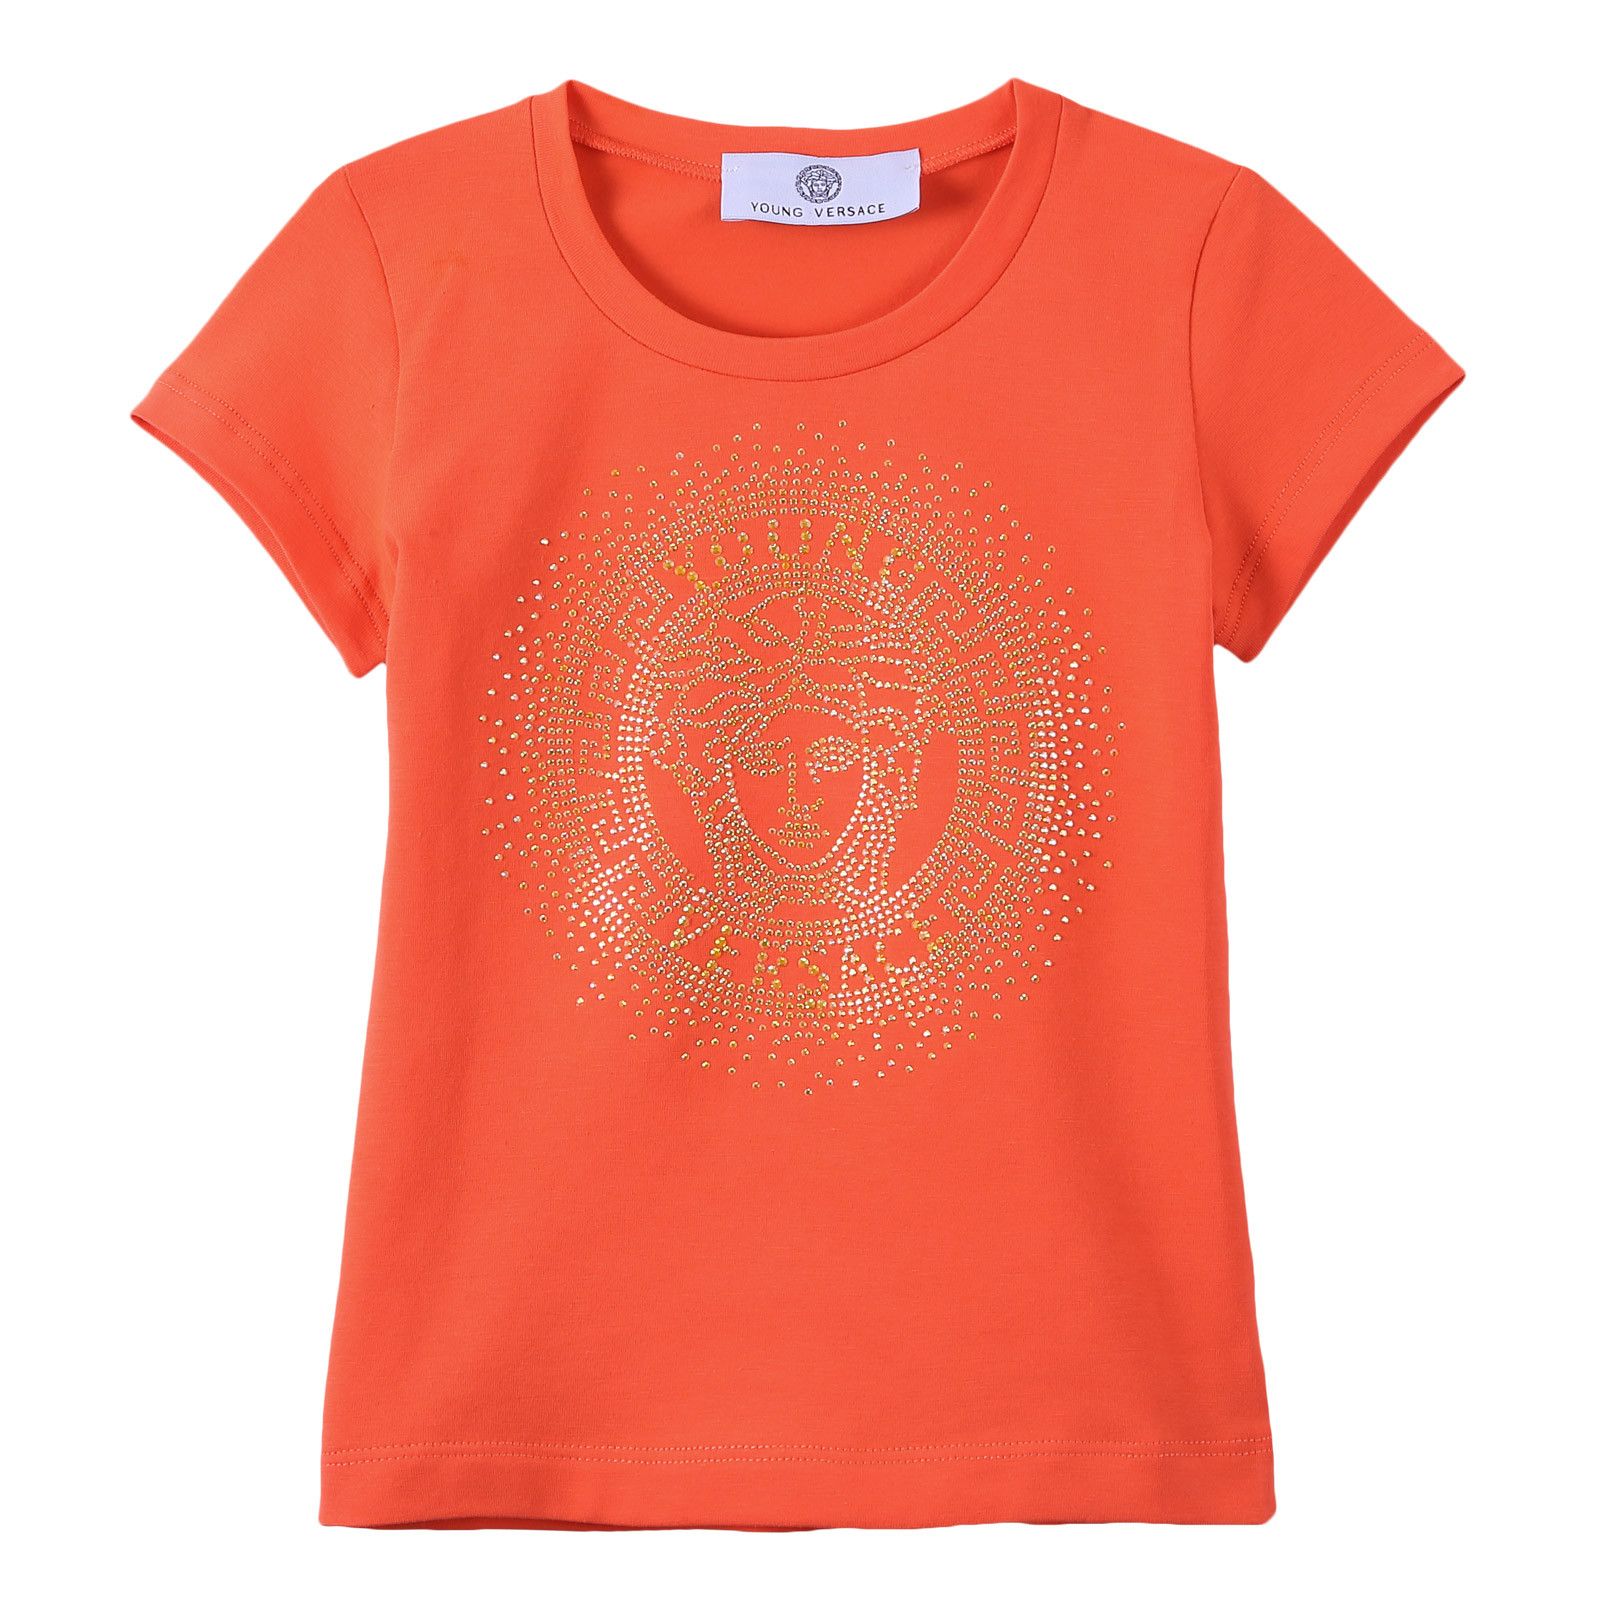 Girls Orange Cotton T-Shirt With Yellow Medusa Logo - CÉMAROSE | Children's Fashion Store - 1